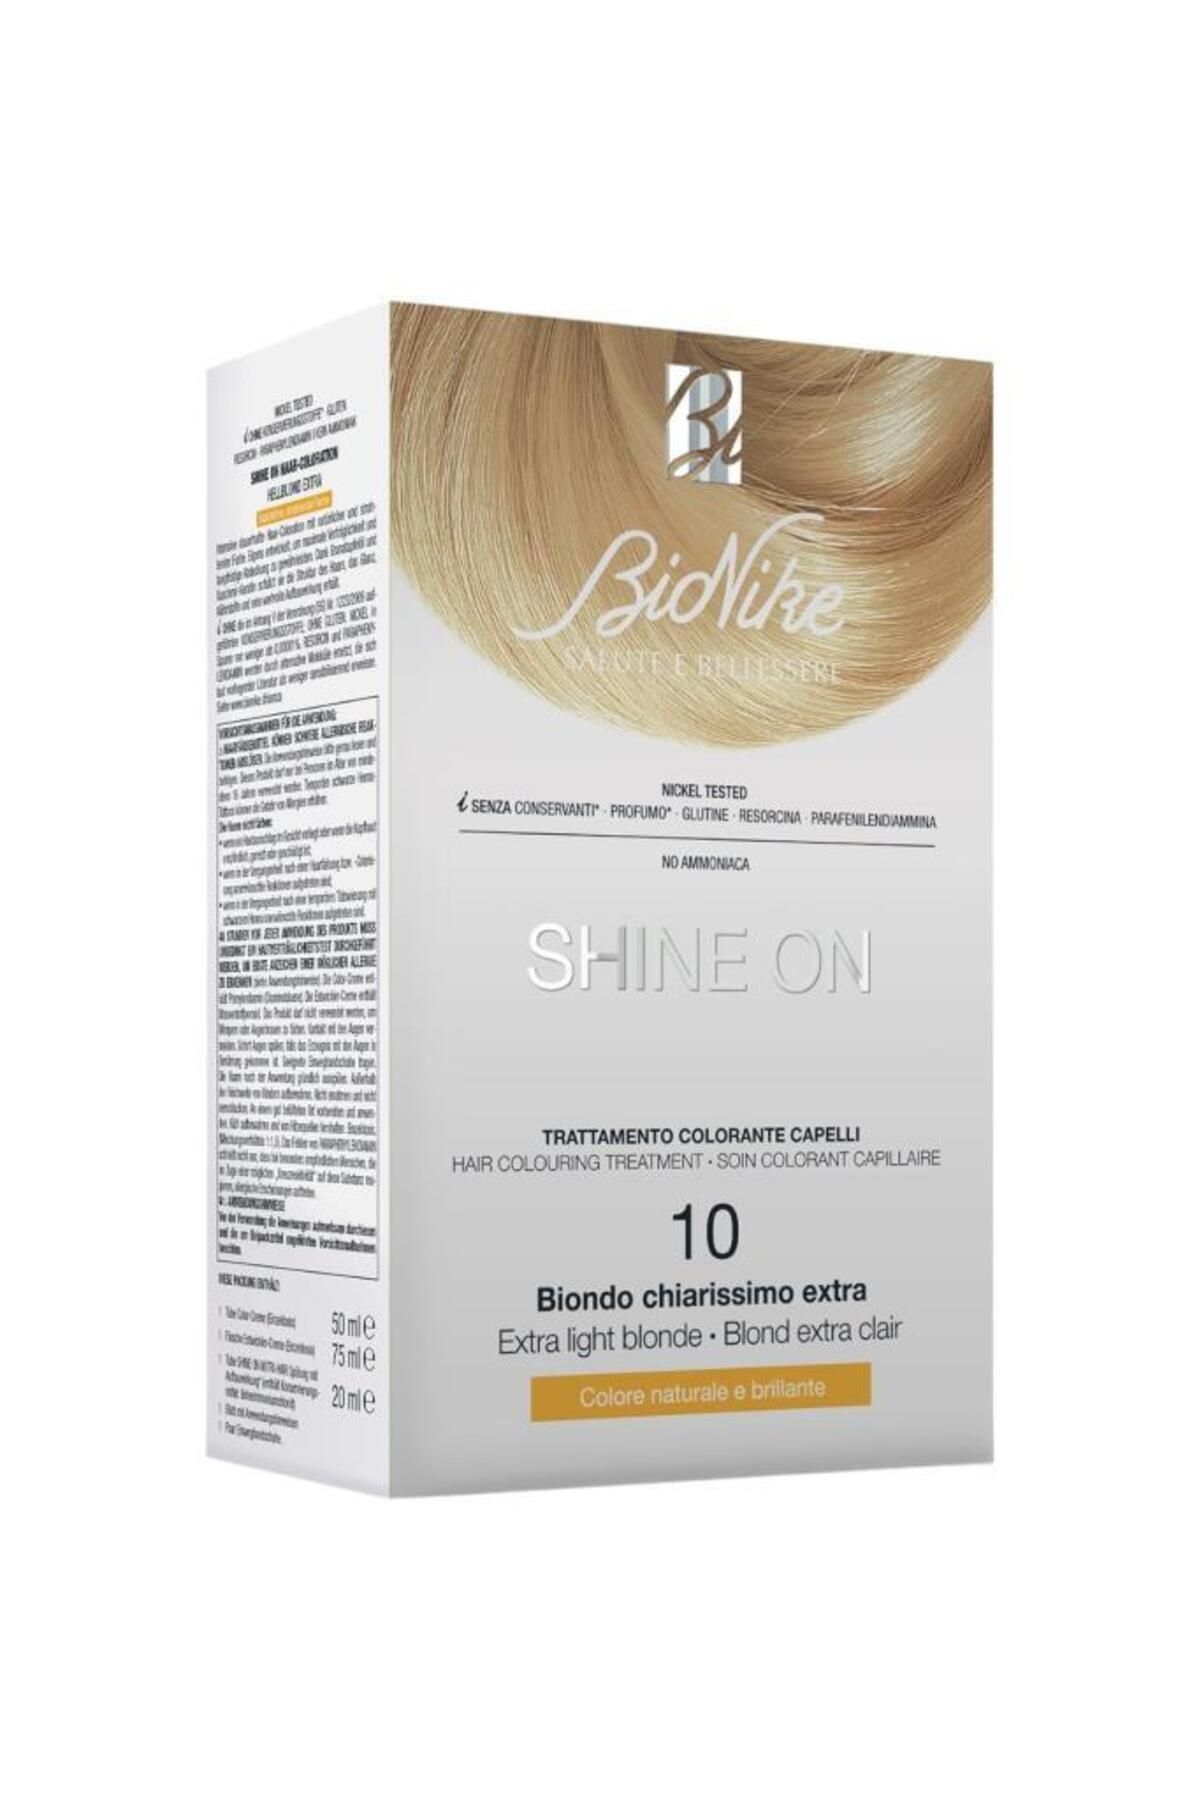 BioNike Shıne On Hair Colouring Treatment No: 10.0 Extralıght Blonde